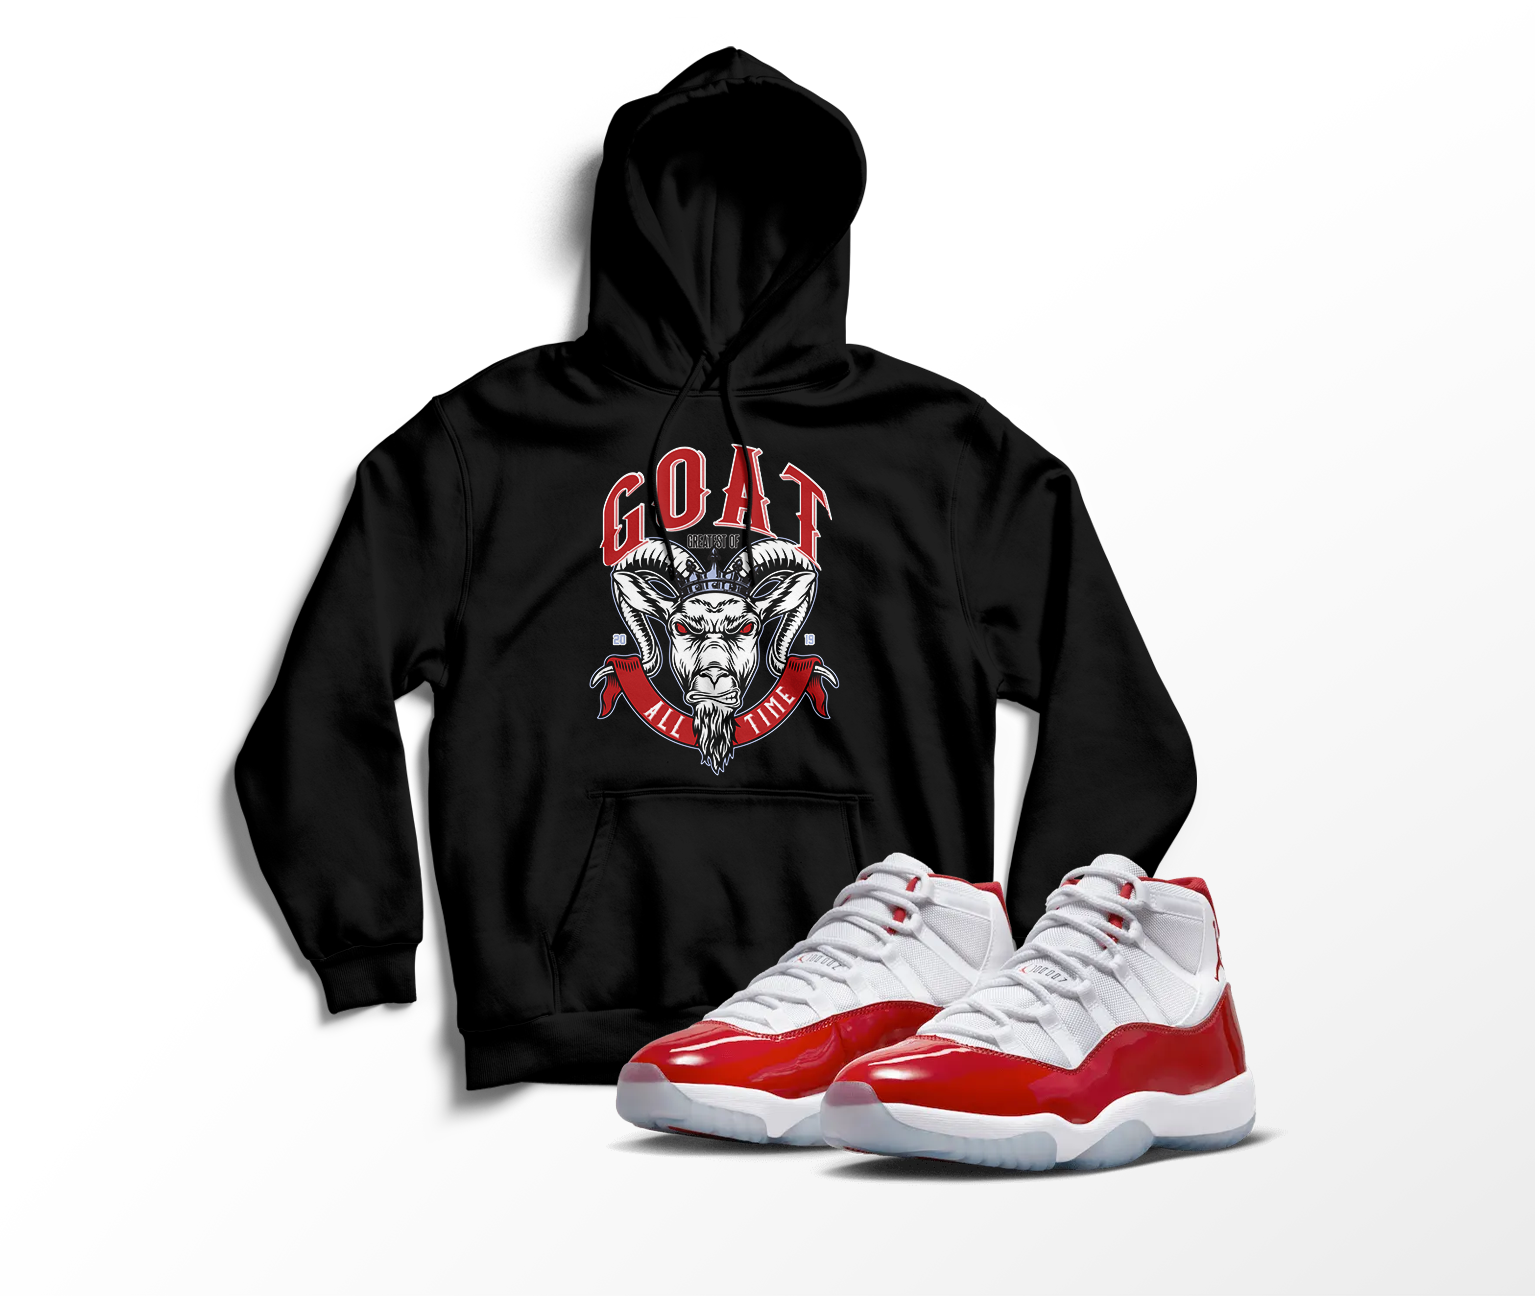 'GOAT' Custom Graphic Hoodie To Match Air Jordan 11 Cherry Red